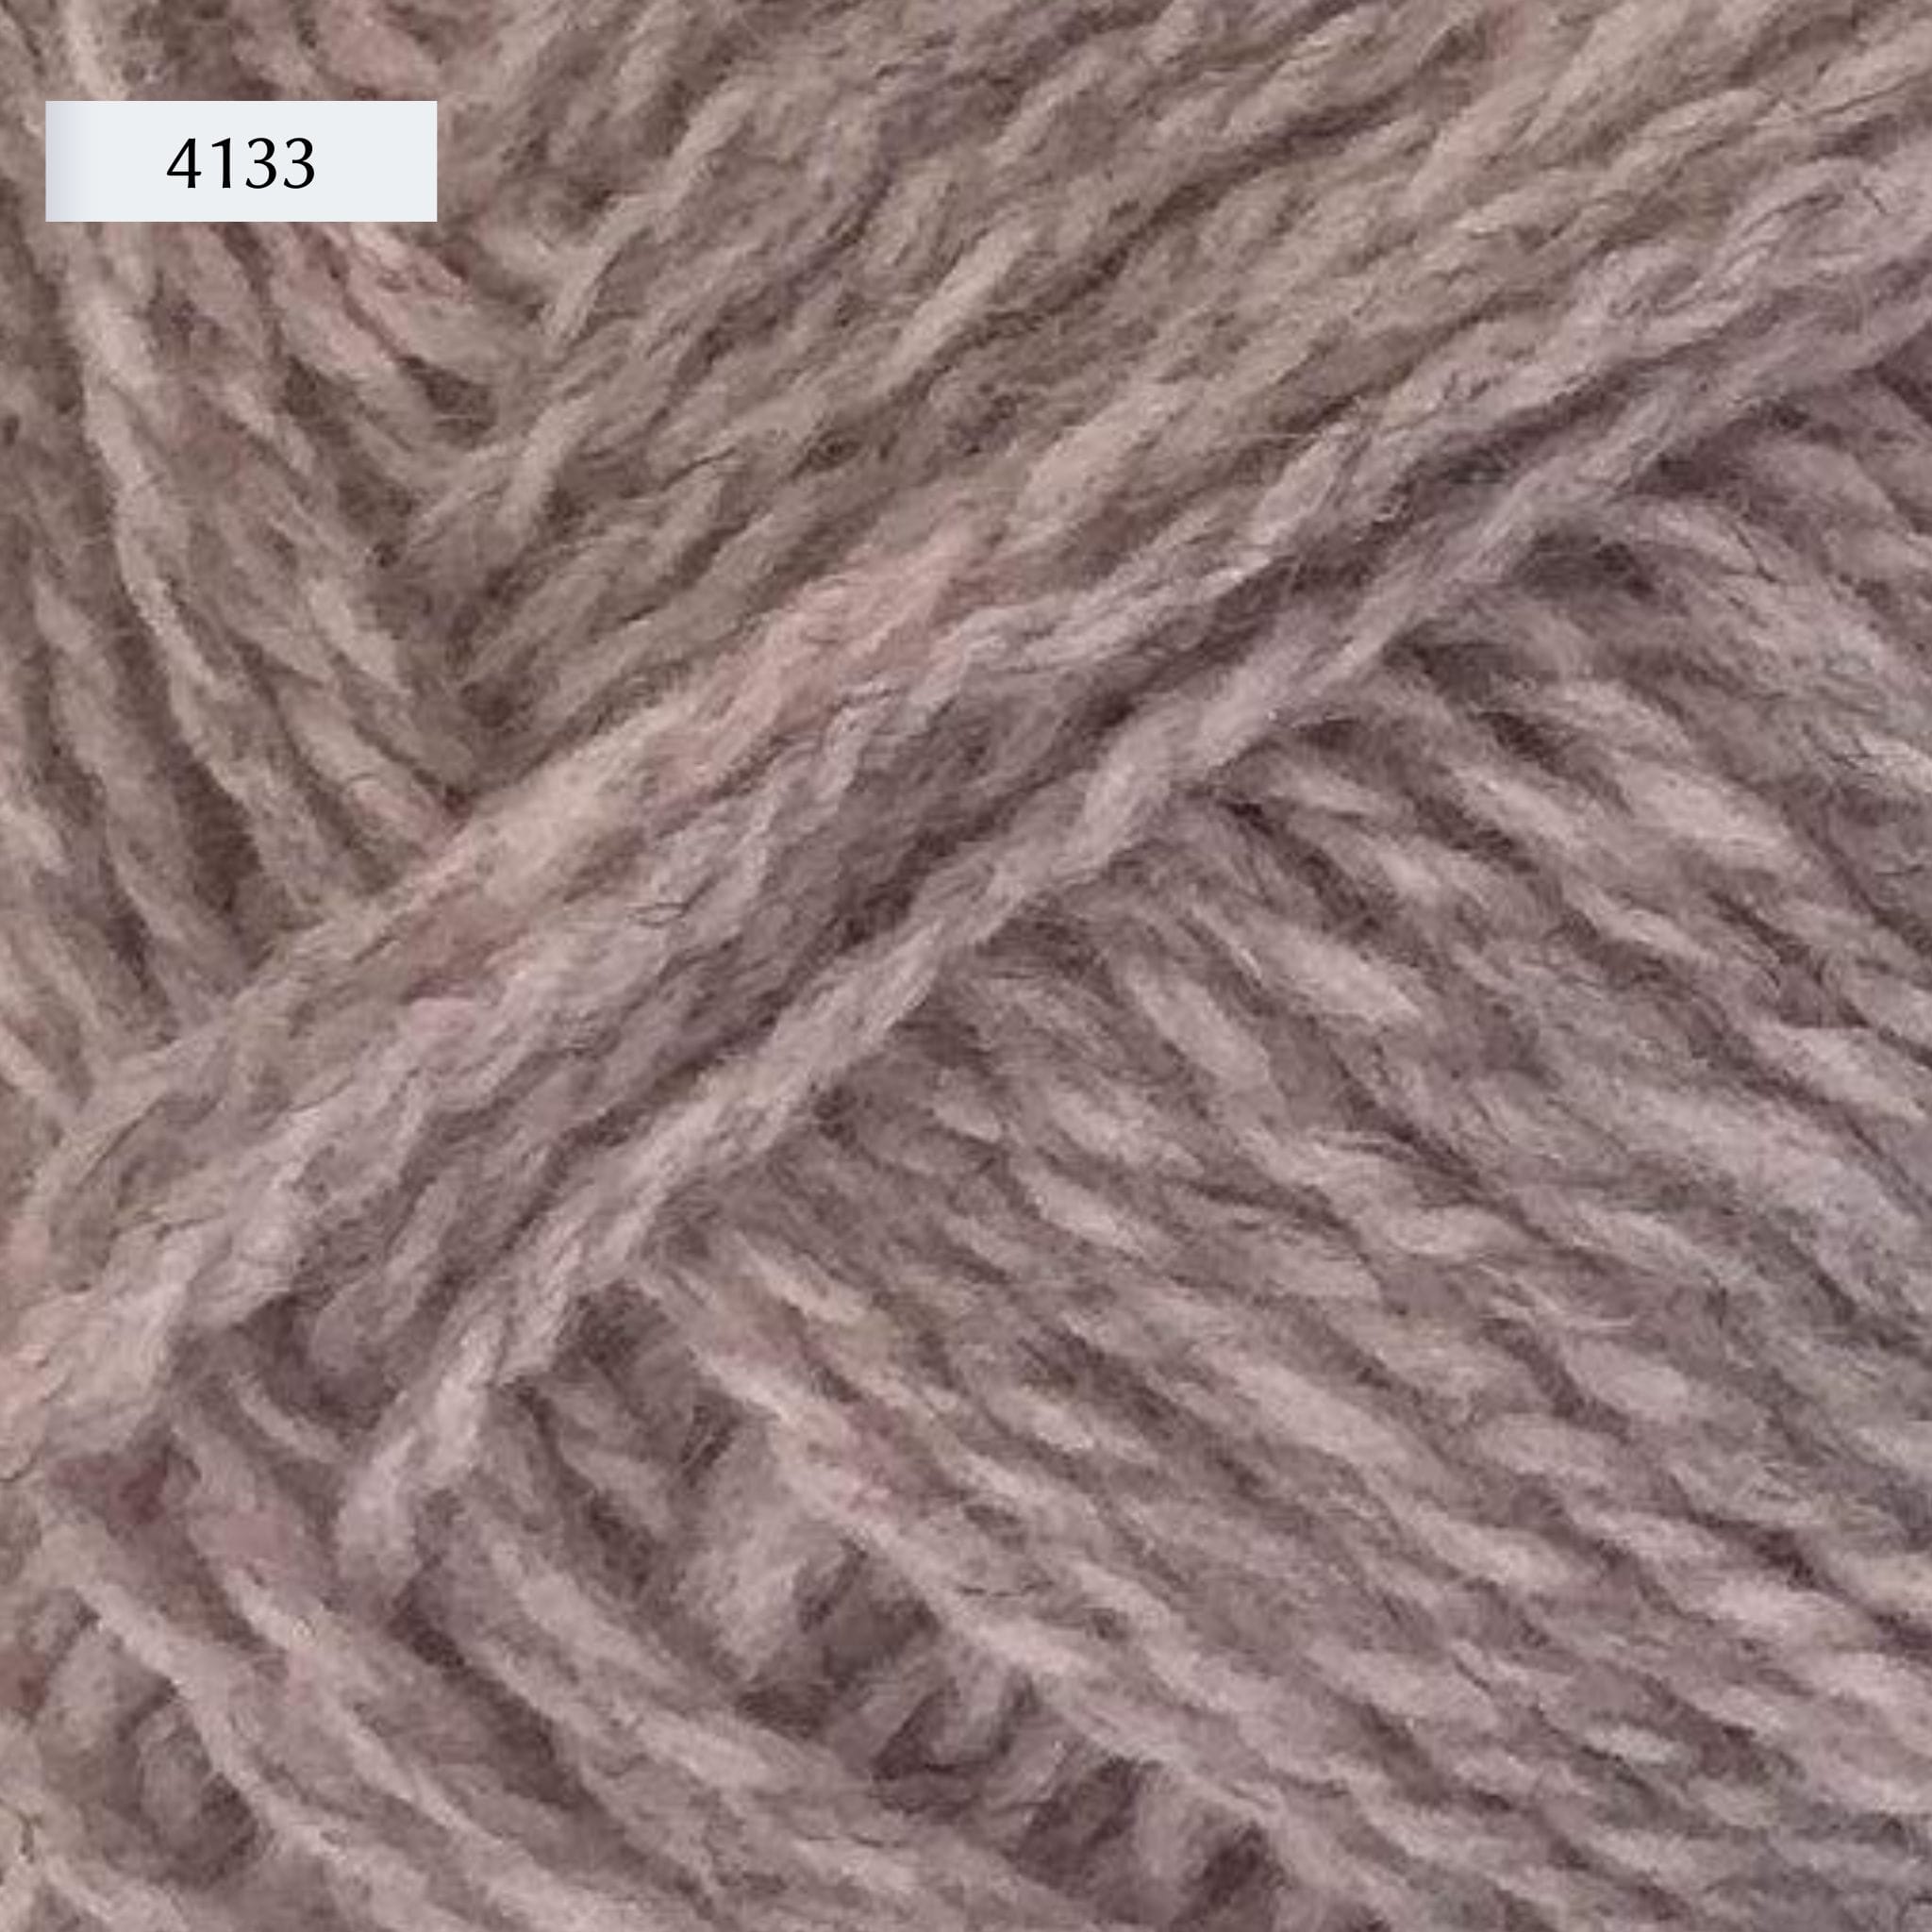 Rauma Finullgarn, a fingering/sport weight yarn, in color 4133, a heathered light pink/purple